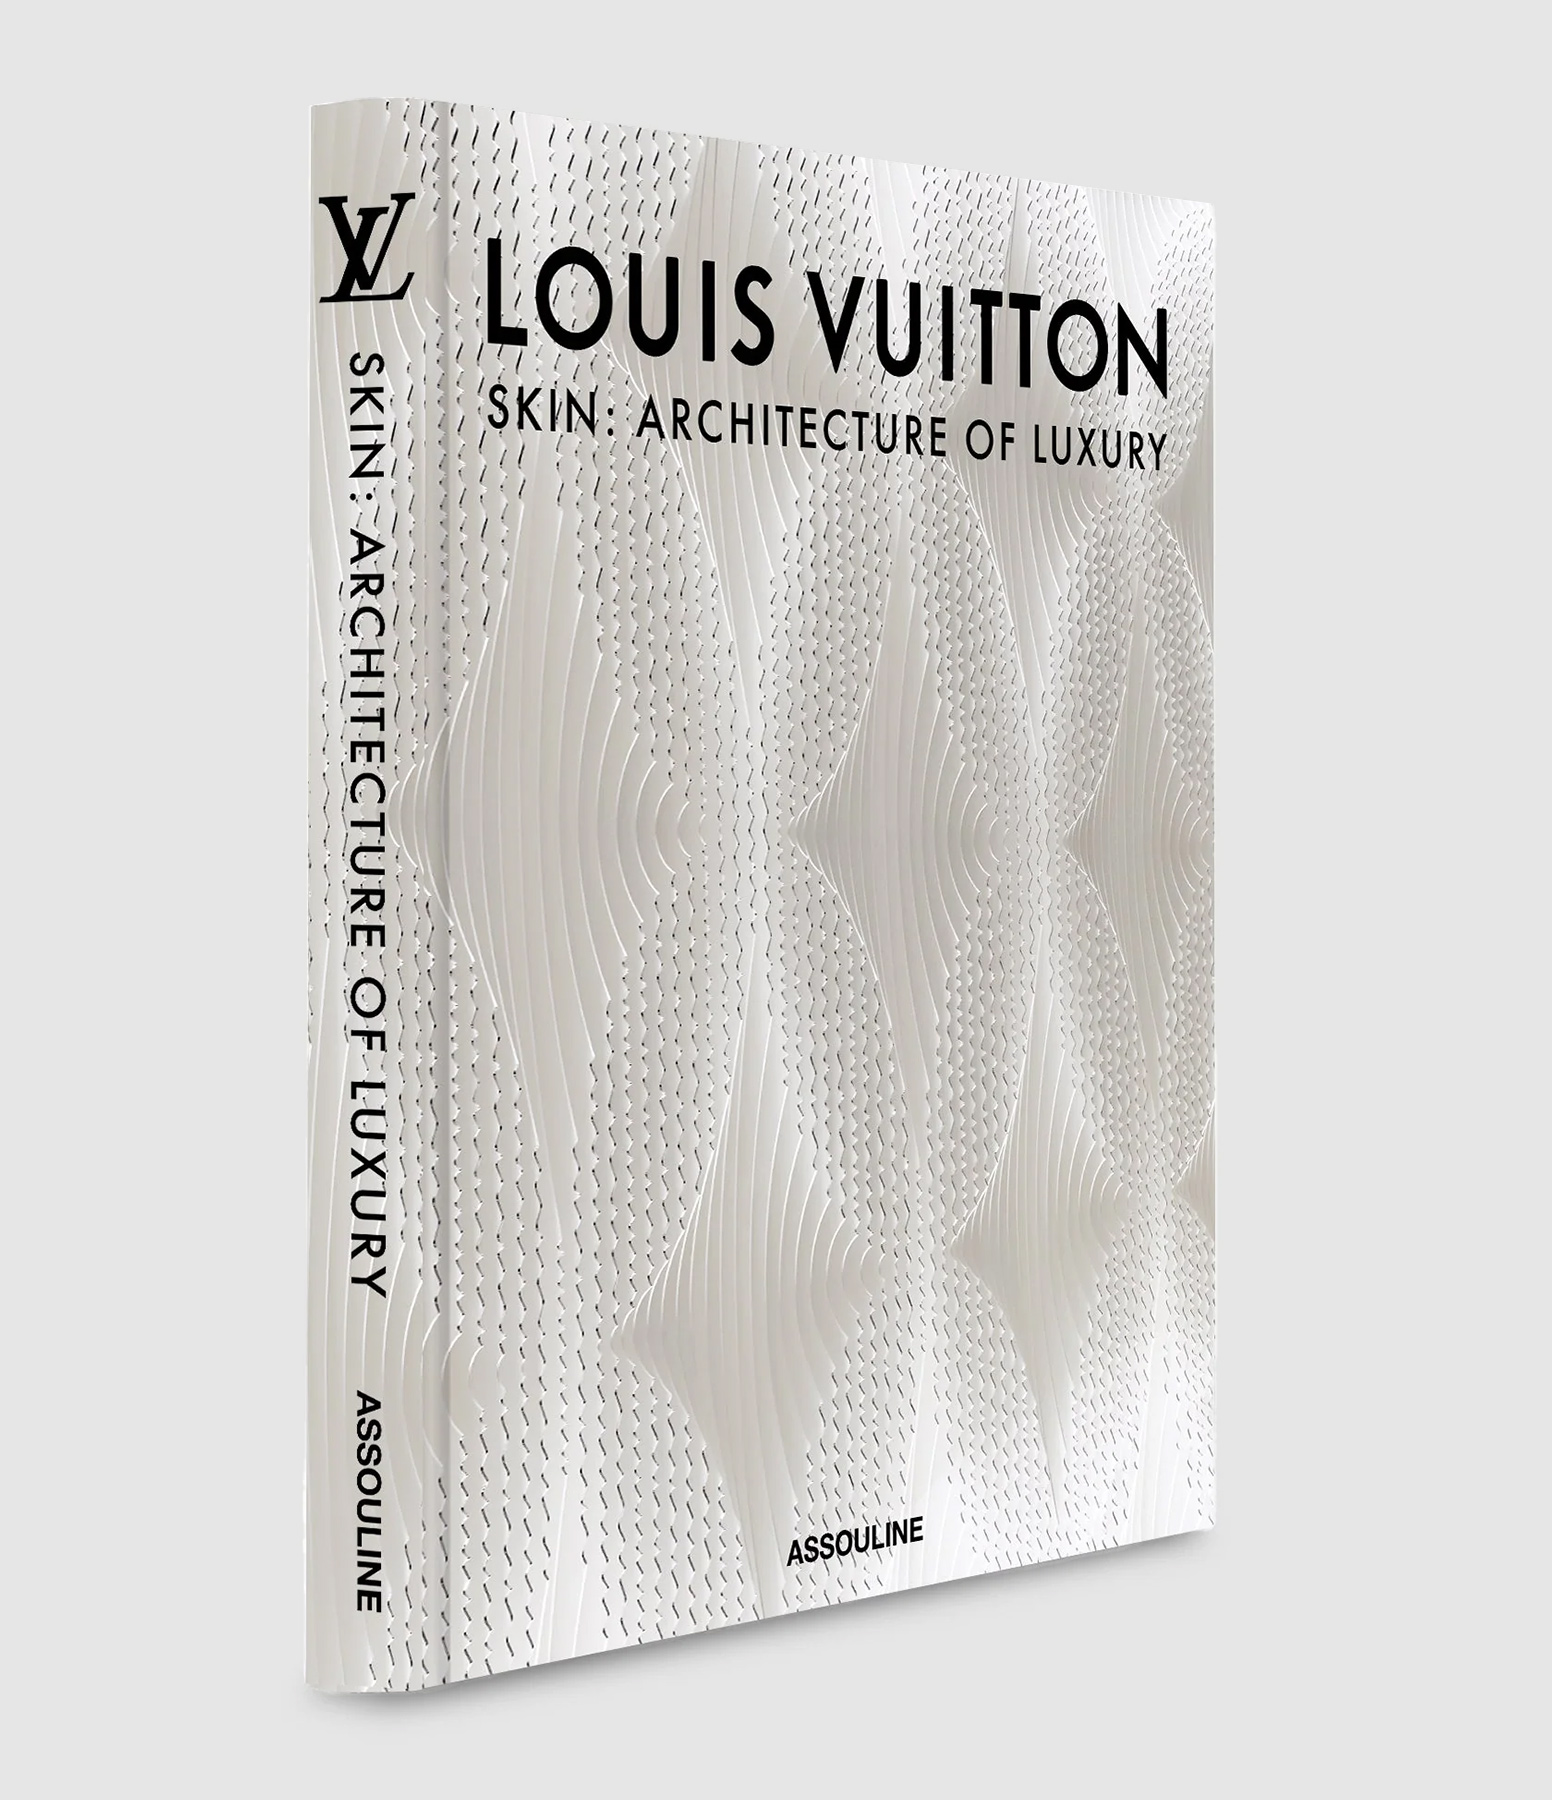 vuitton skin architecture of luxury